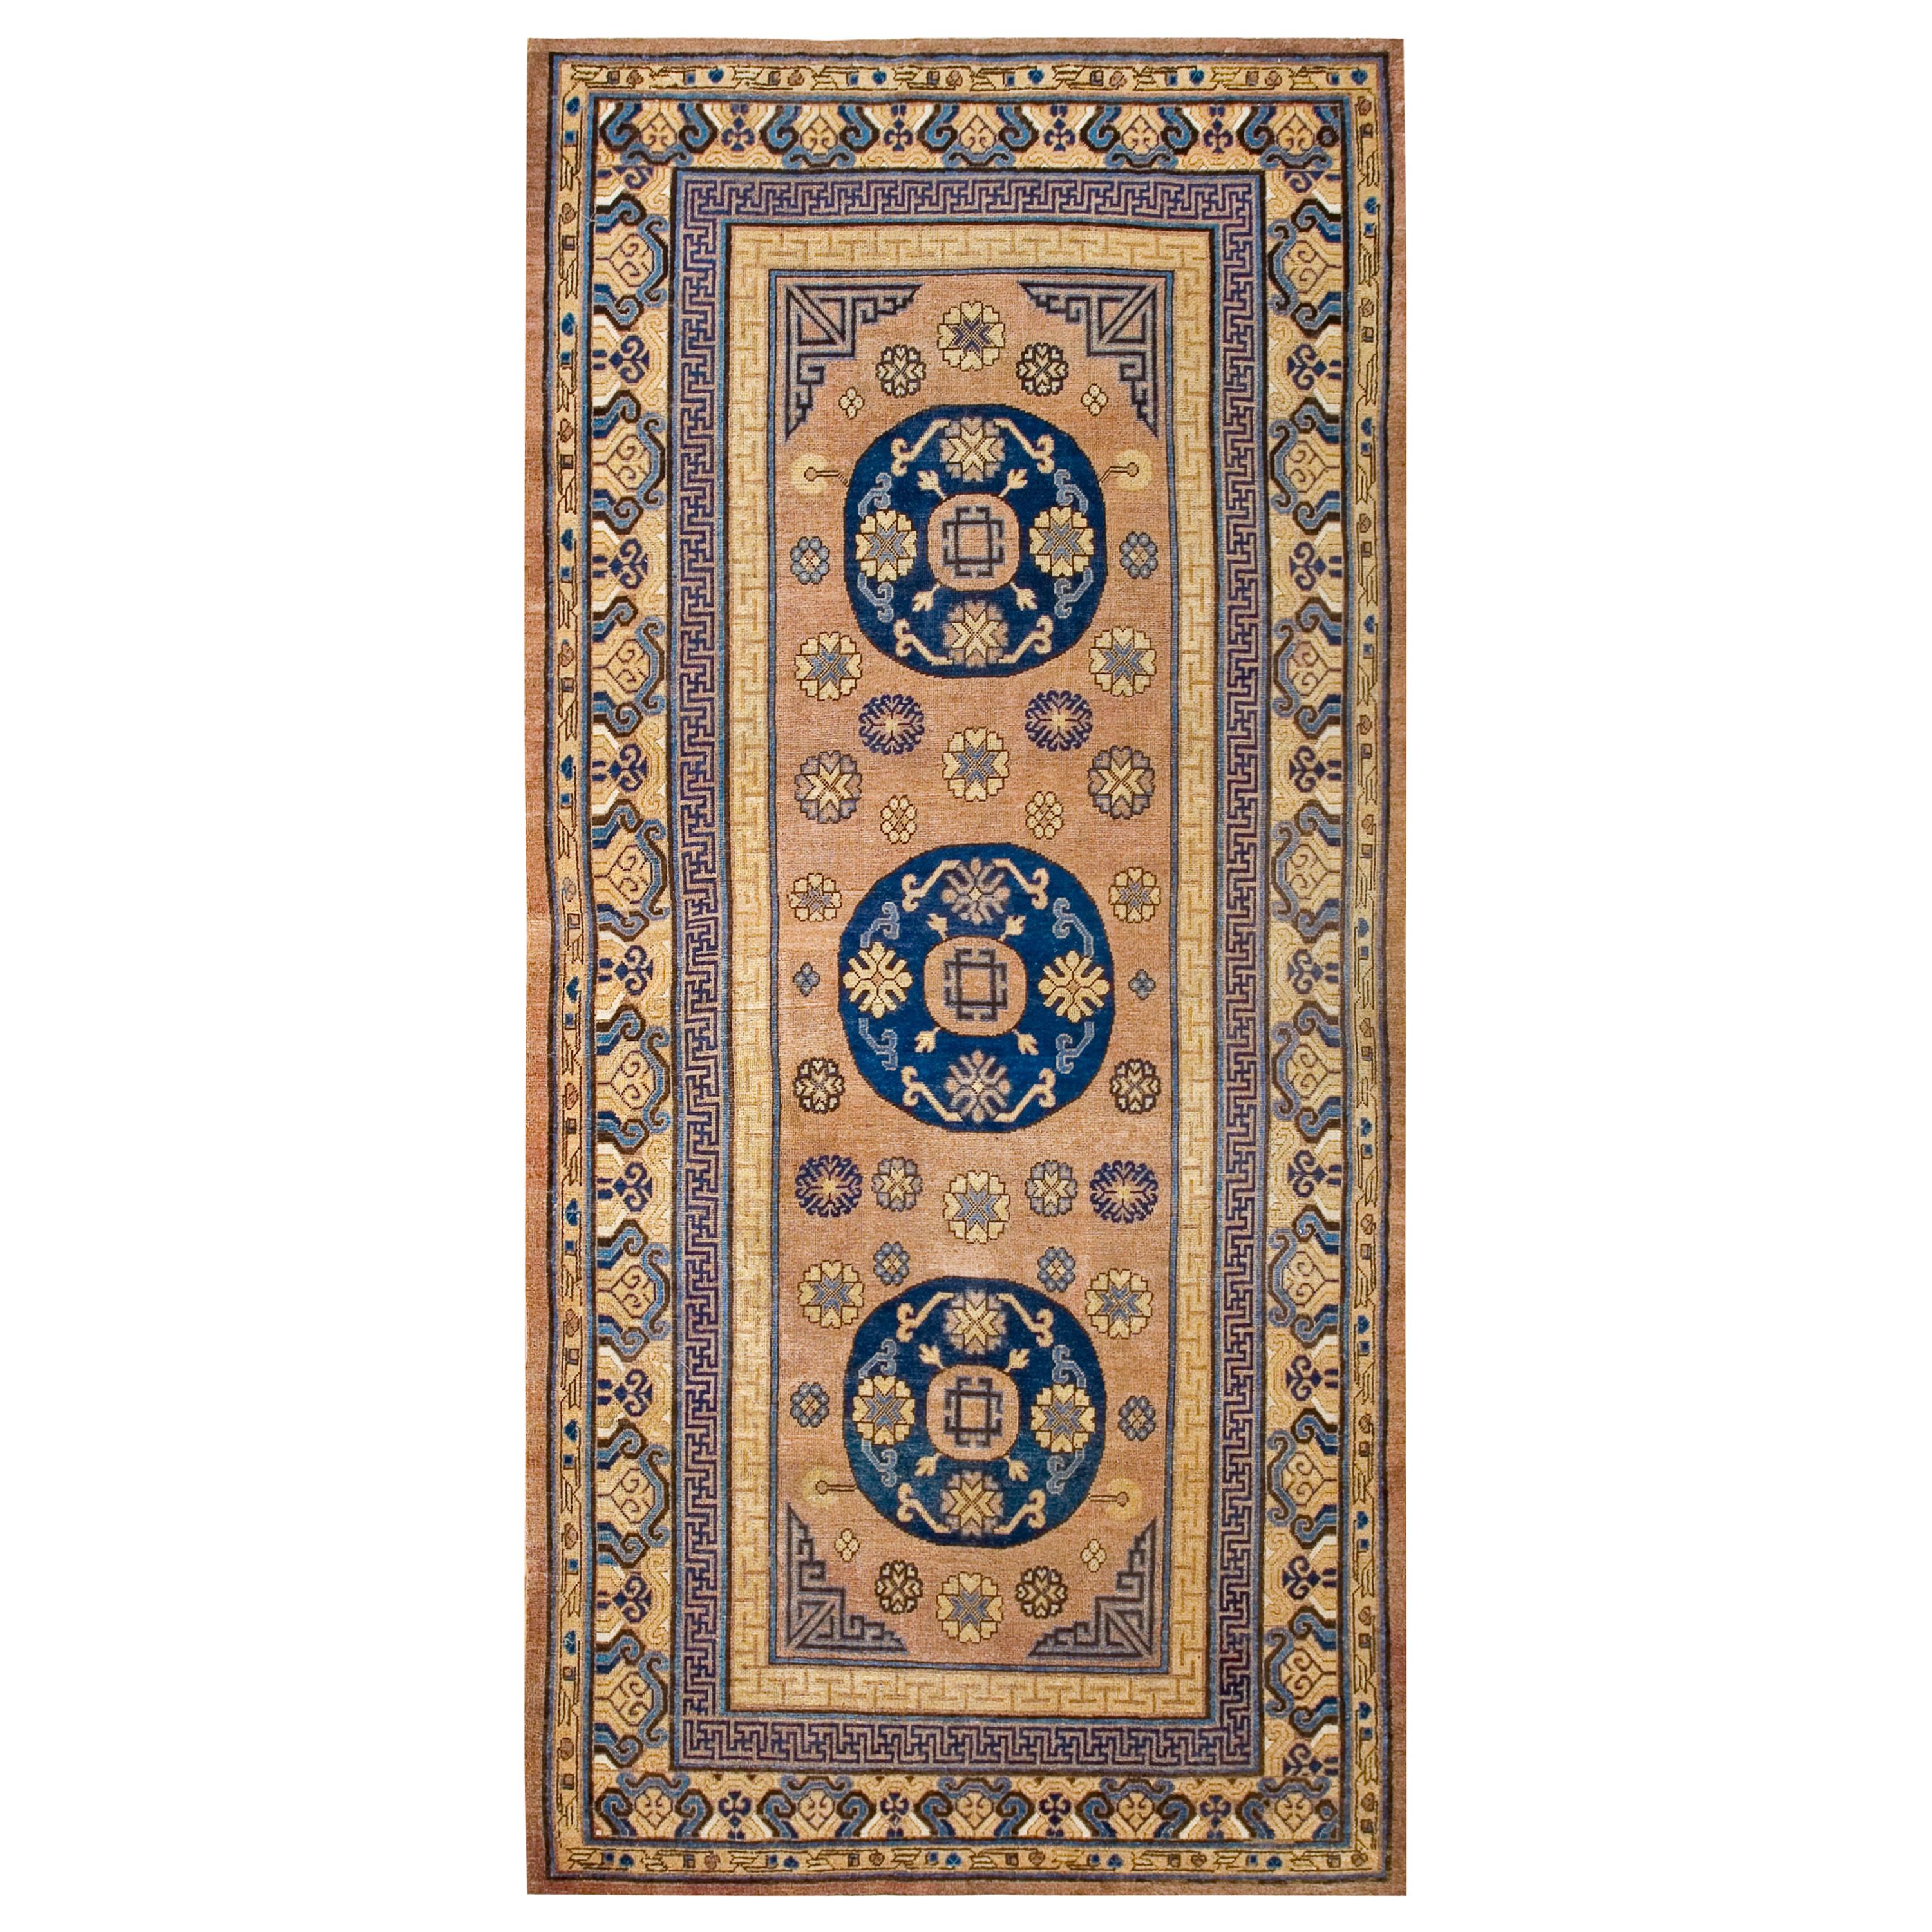 19th Century Central Asian Khotan Carpet ( 6'3" x 13'5" - 190 x 410 )